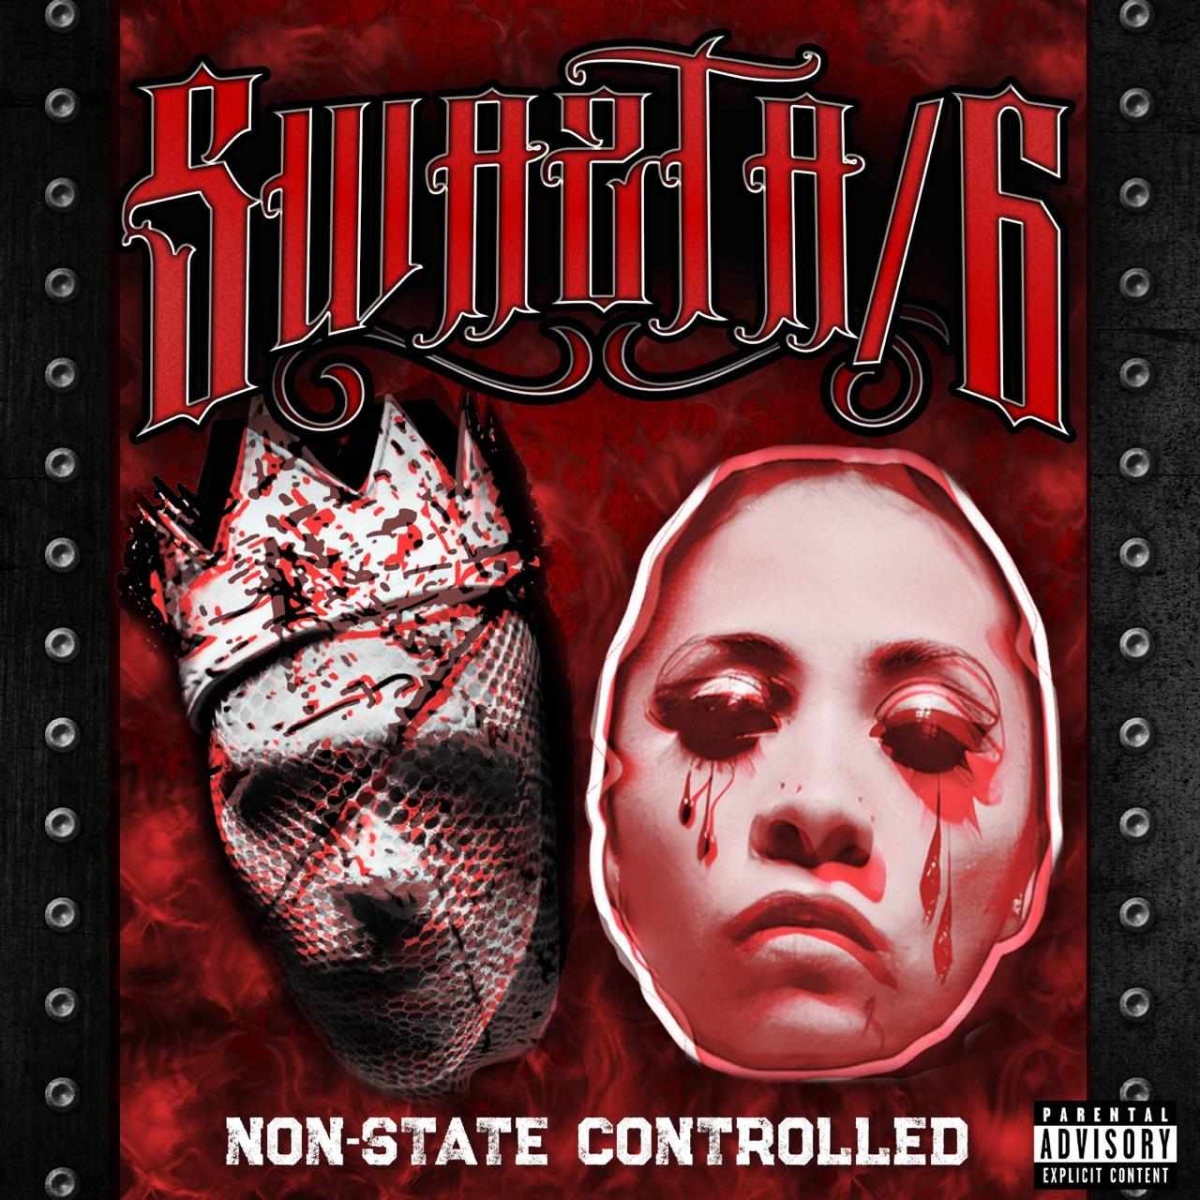 SWAZTA6 – single “Slash Slash” από το EP “Non-state controlled”